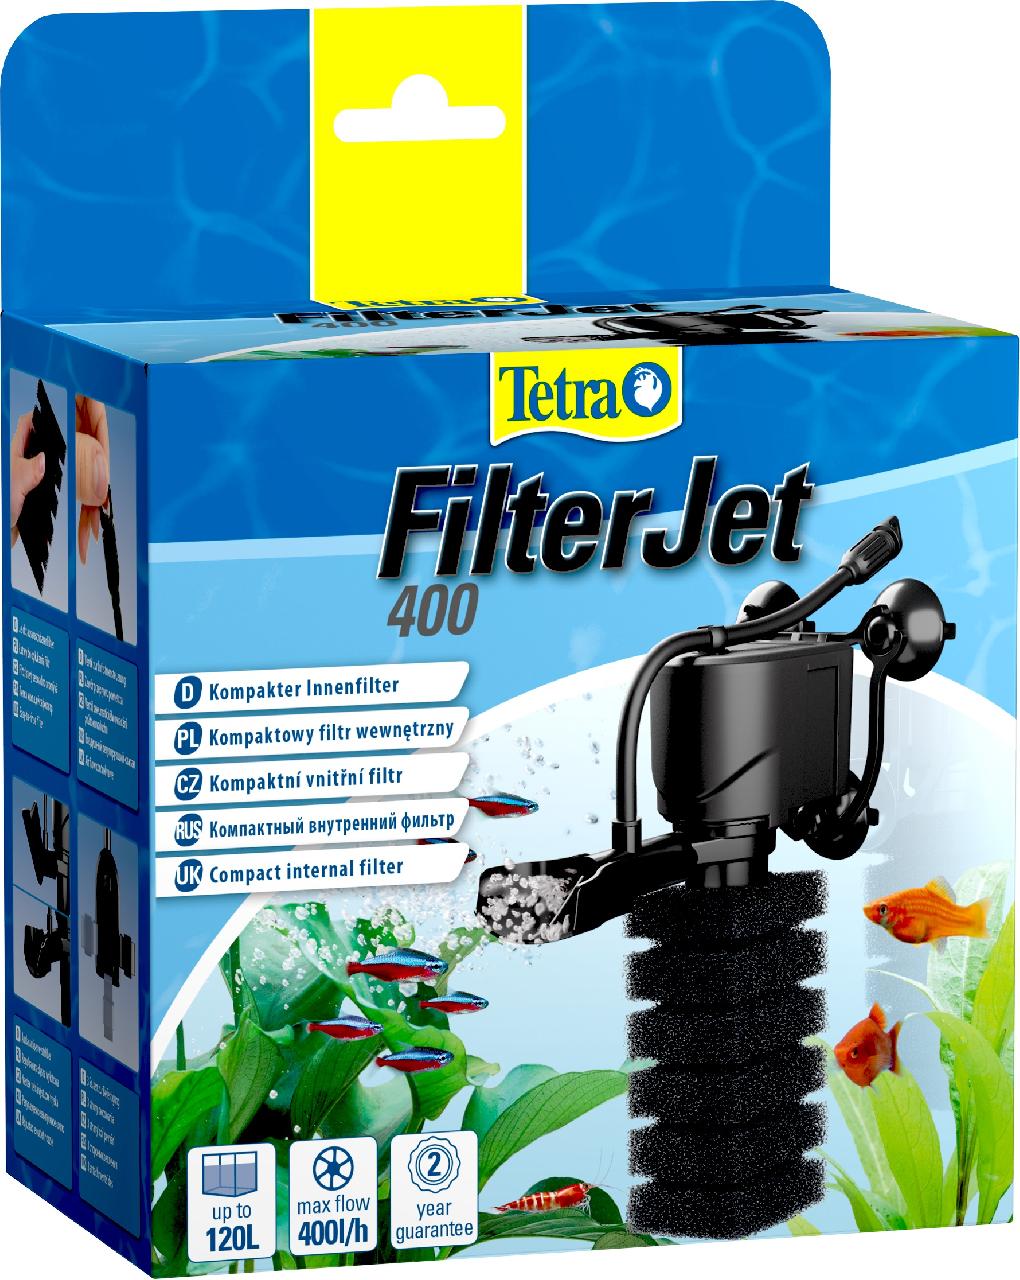 Tetra FilterJet 400 внутренний фильтр для аквариумов объемом 50-120л